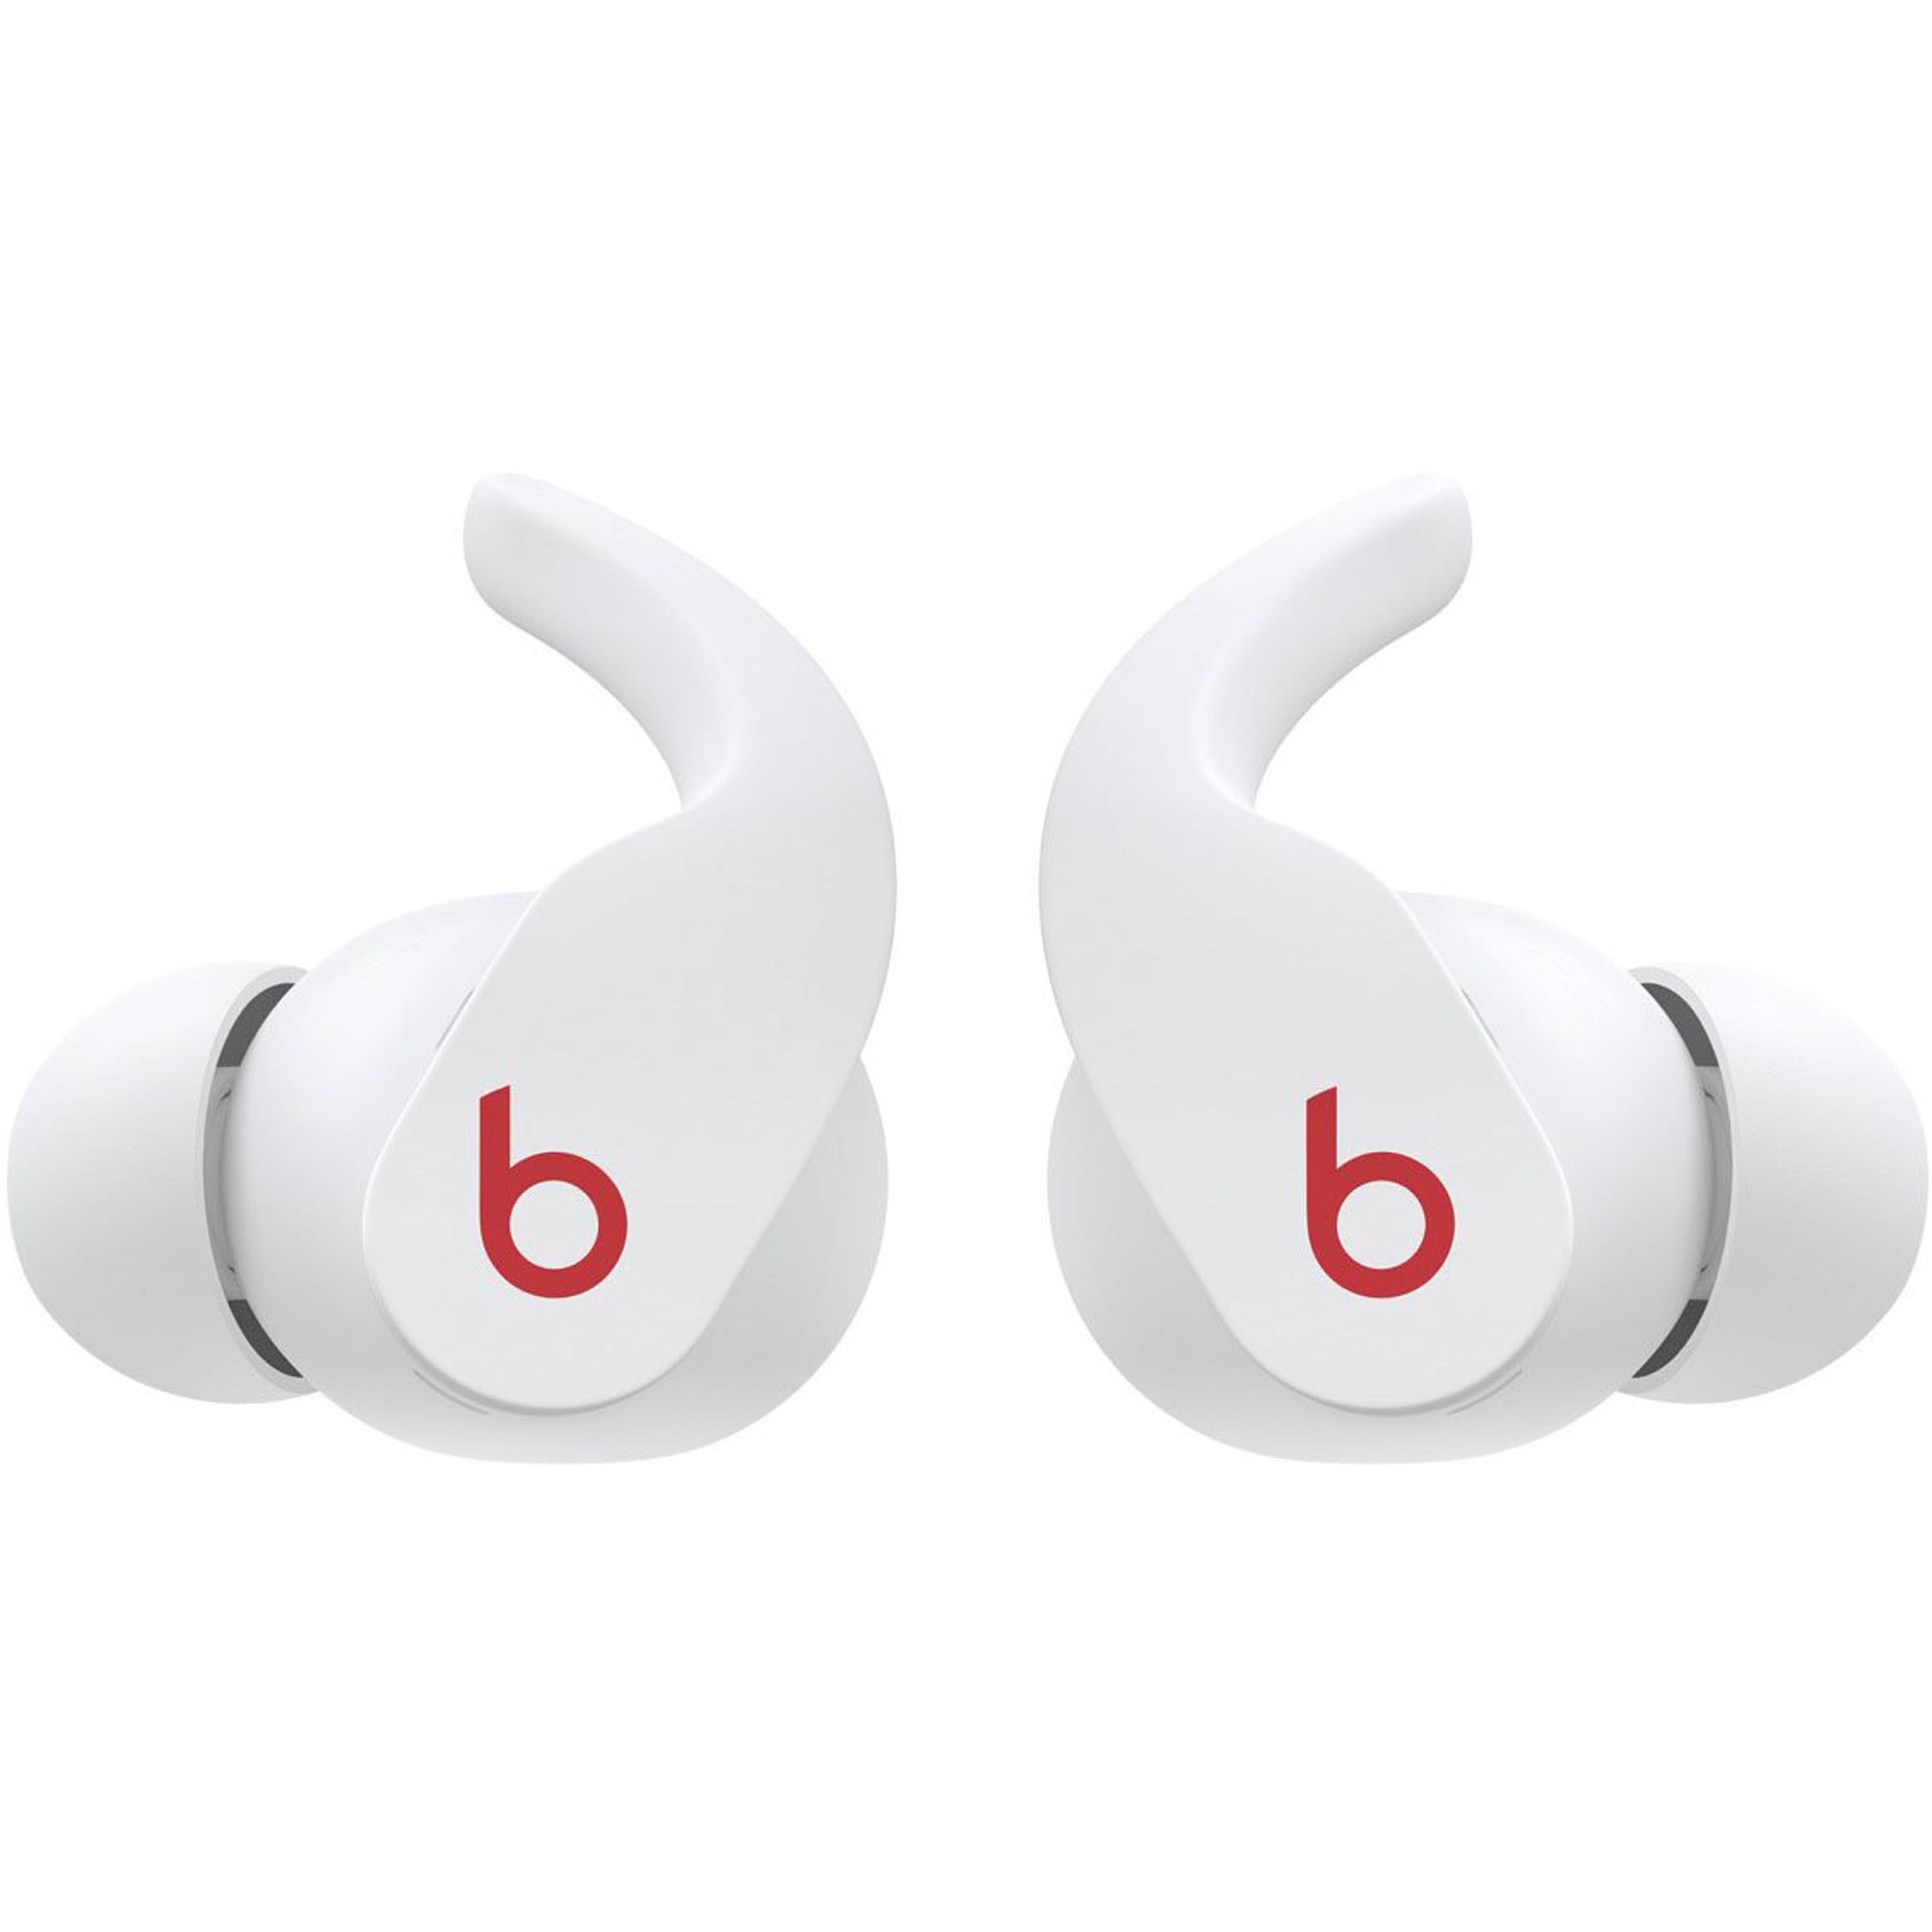 Beats Fit Pro True Wireless Earbuds - Beats White Headphones at